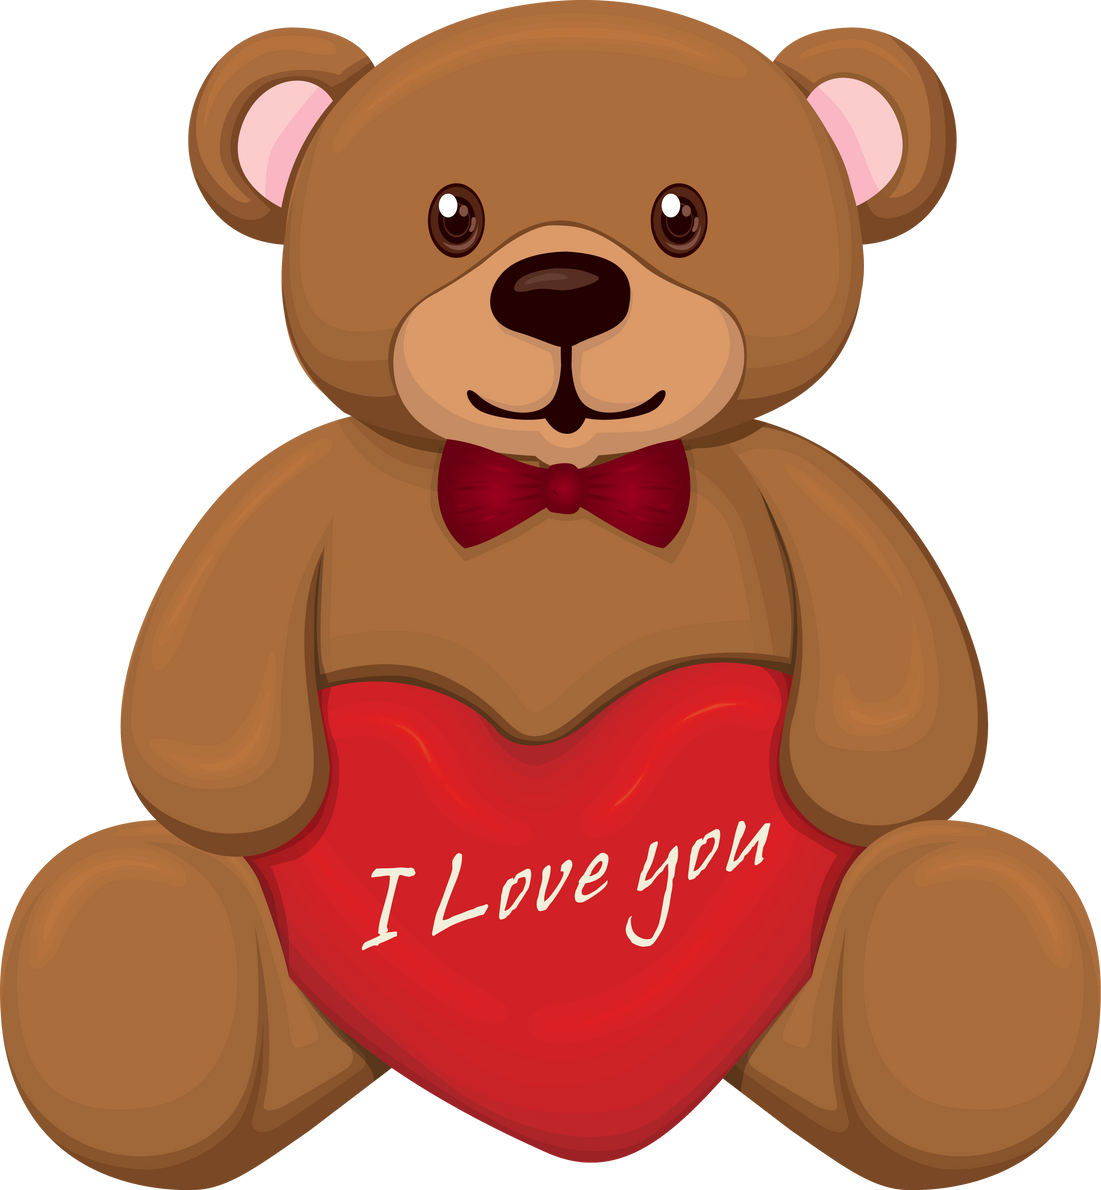 Valentine's Day Teddy Bear Illustration